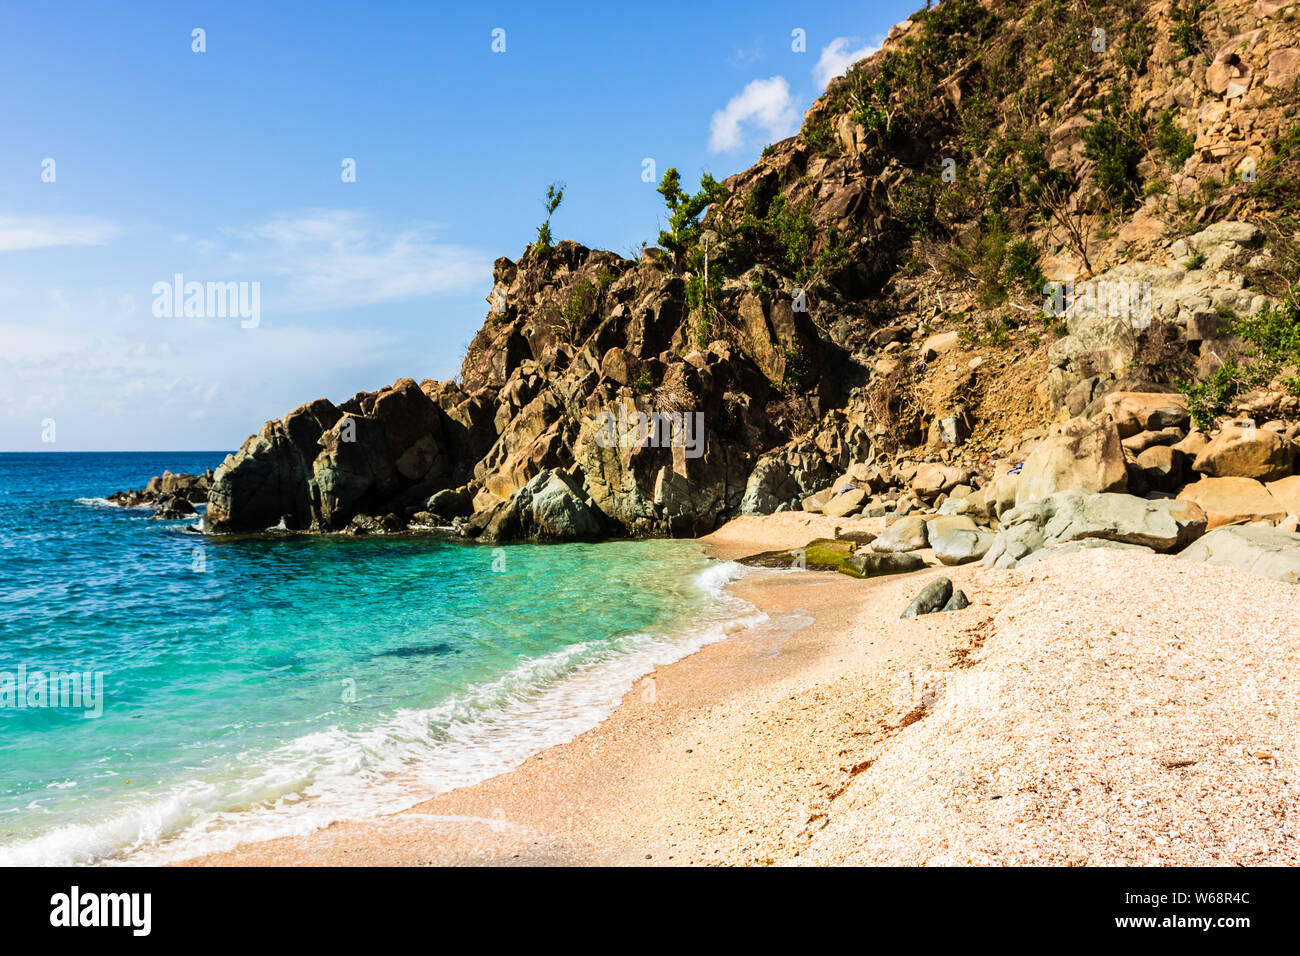 Reisen Foto von St. Barth's Island, Karibik. Die berühmte Shell Beach, St. Barth's (St. Bart's) Karibik. Stockfoto